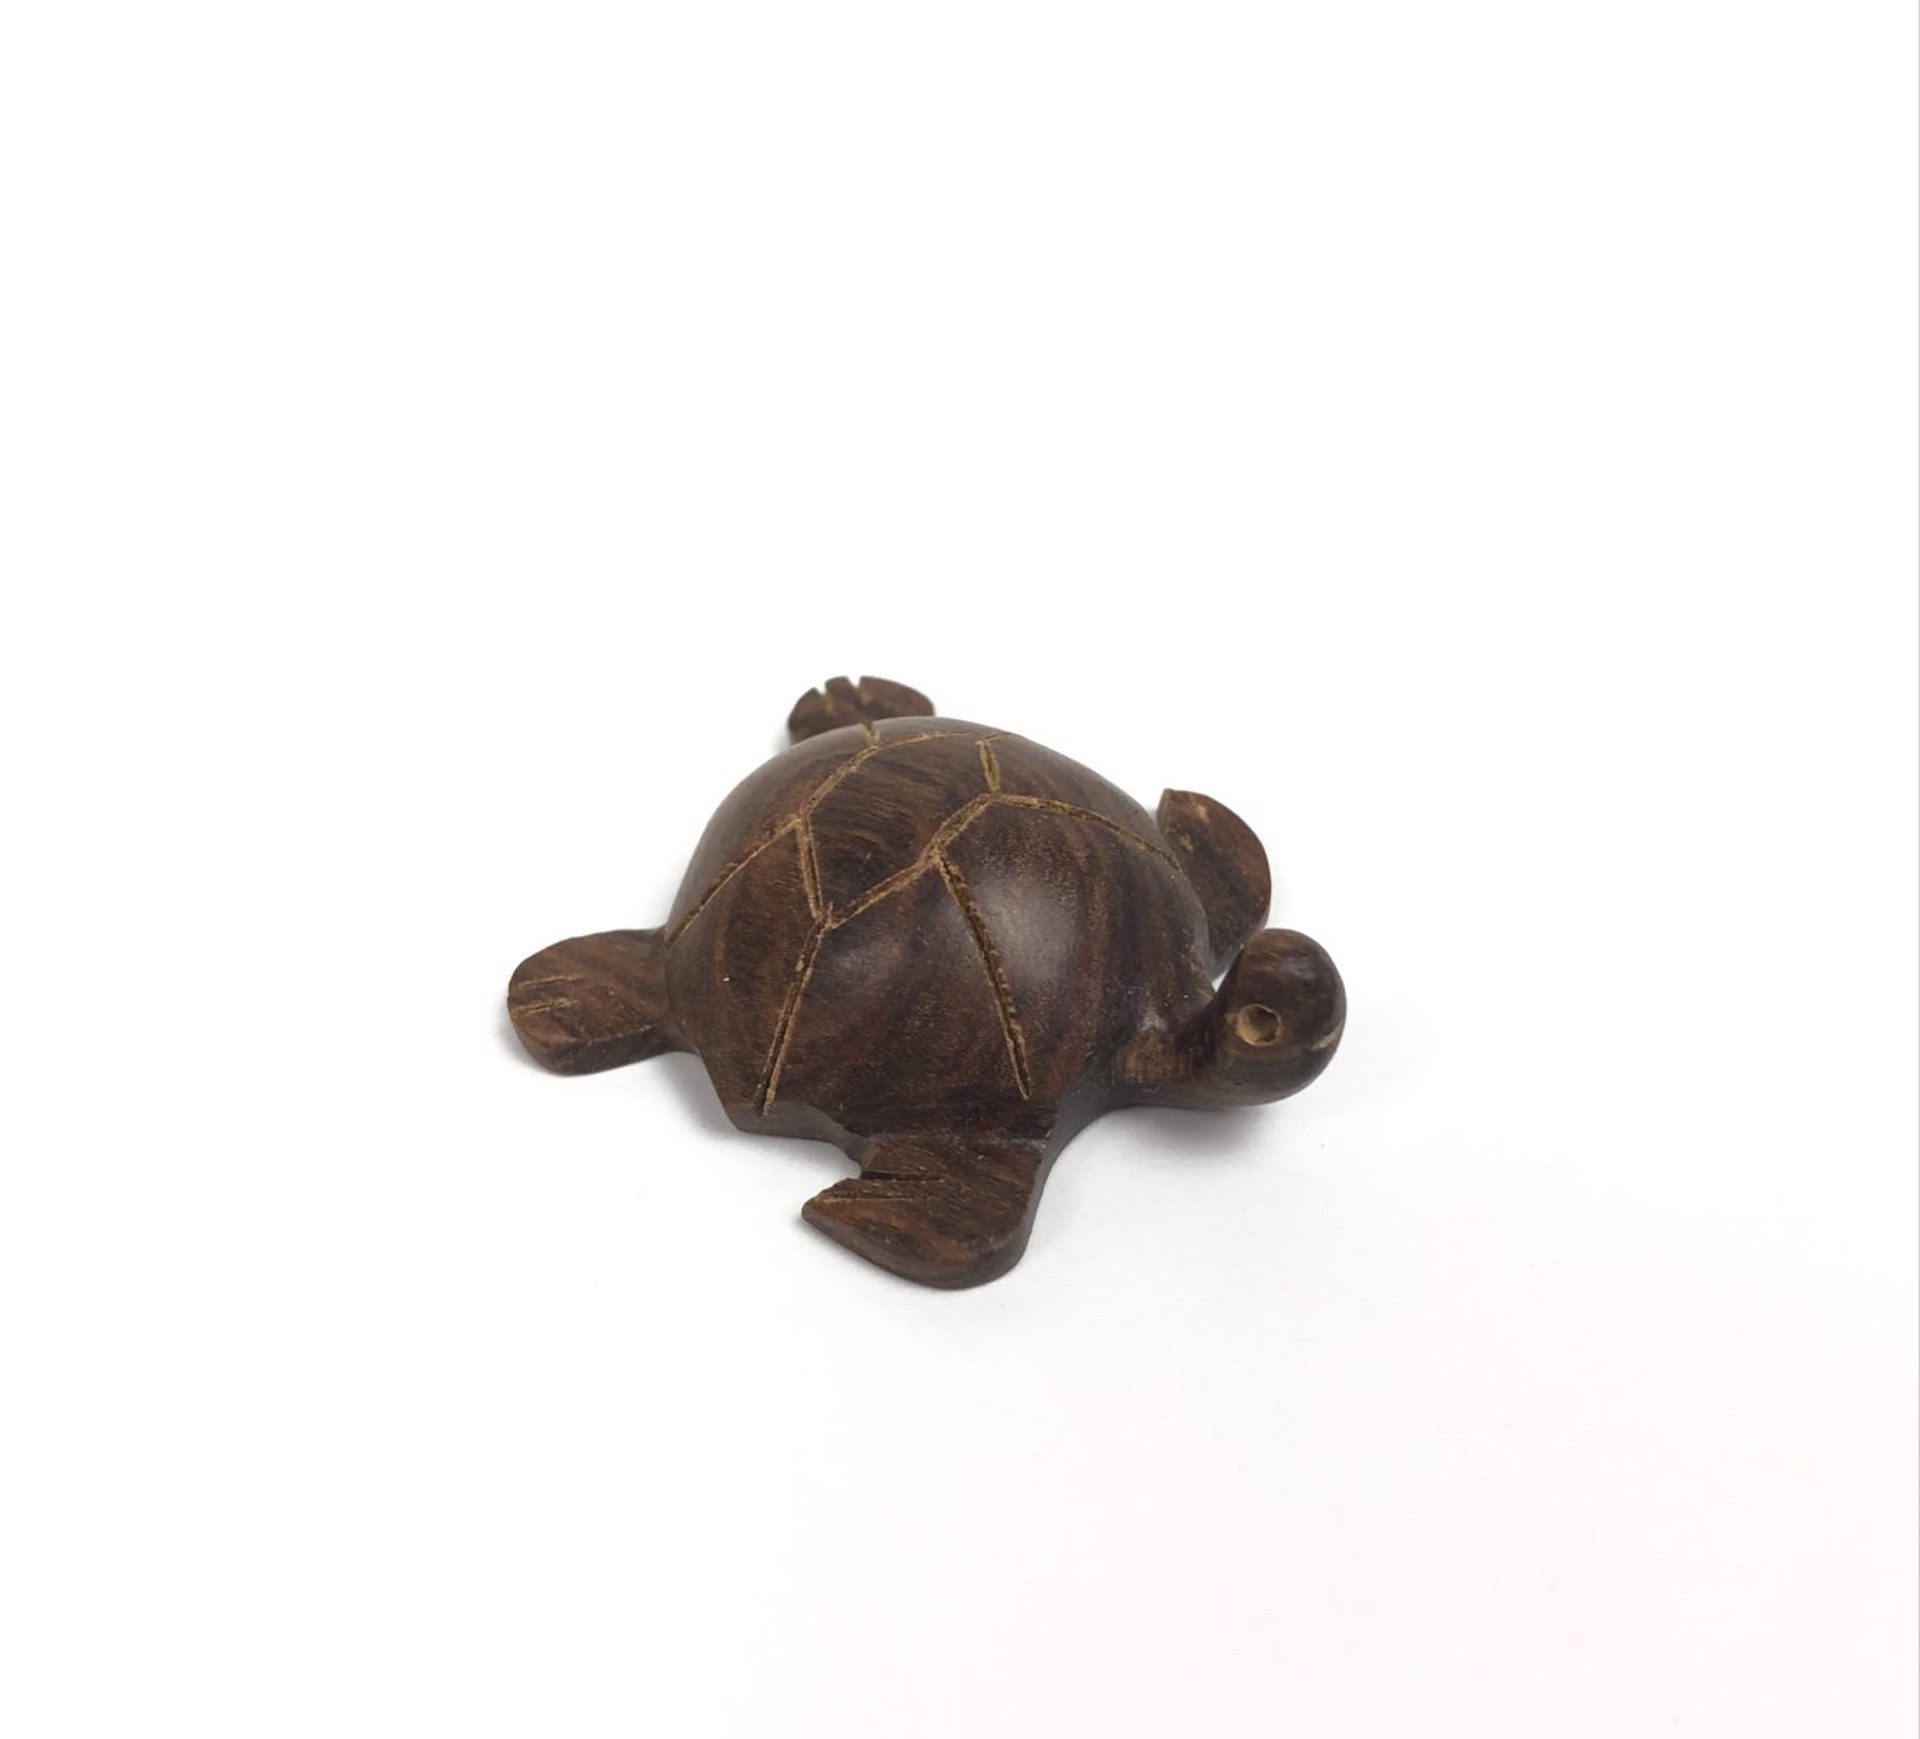 Turtle by Steven G. Febres-Cordero